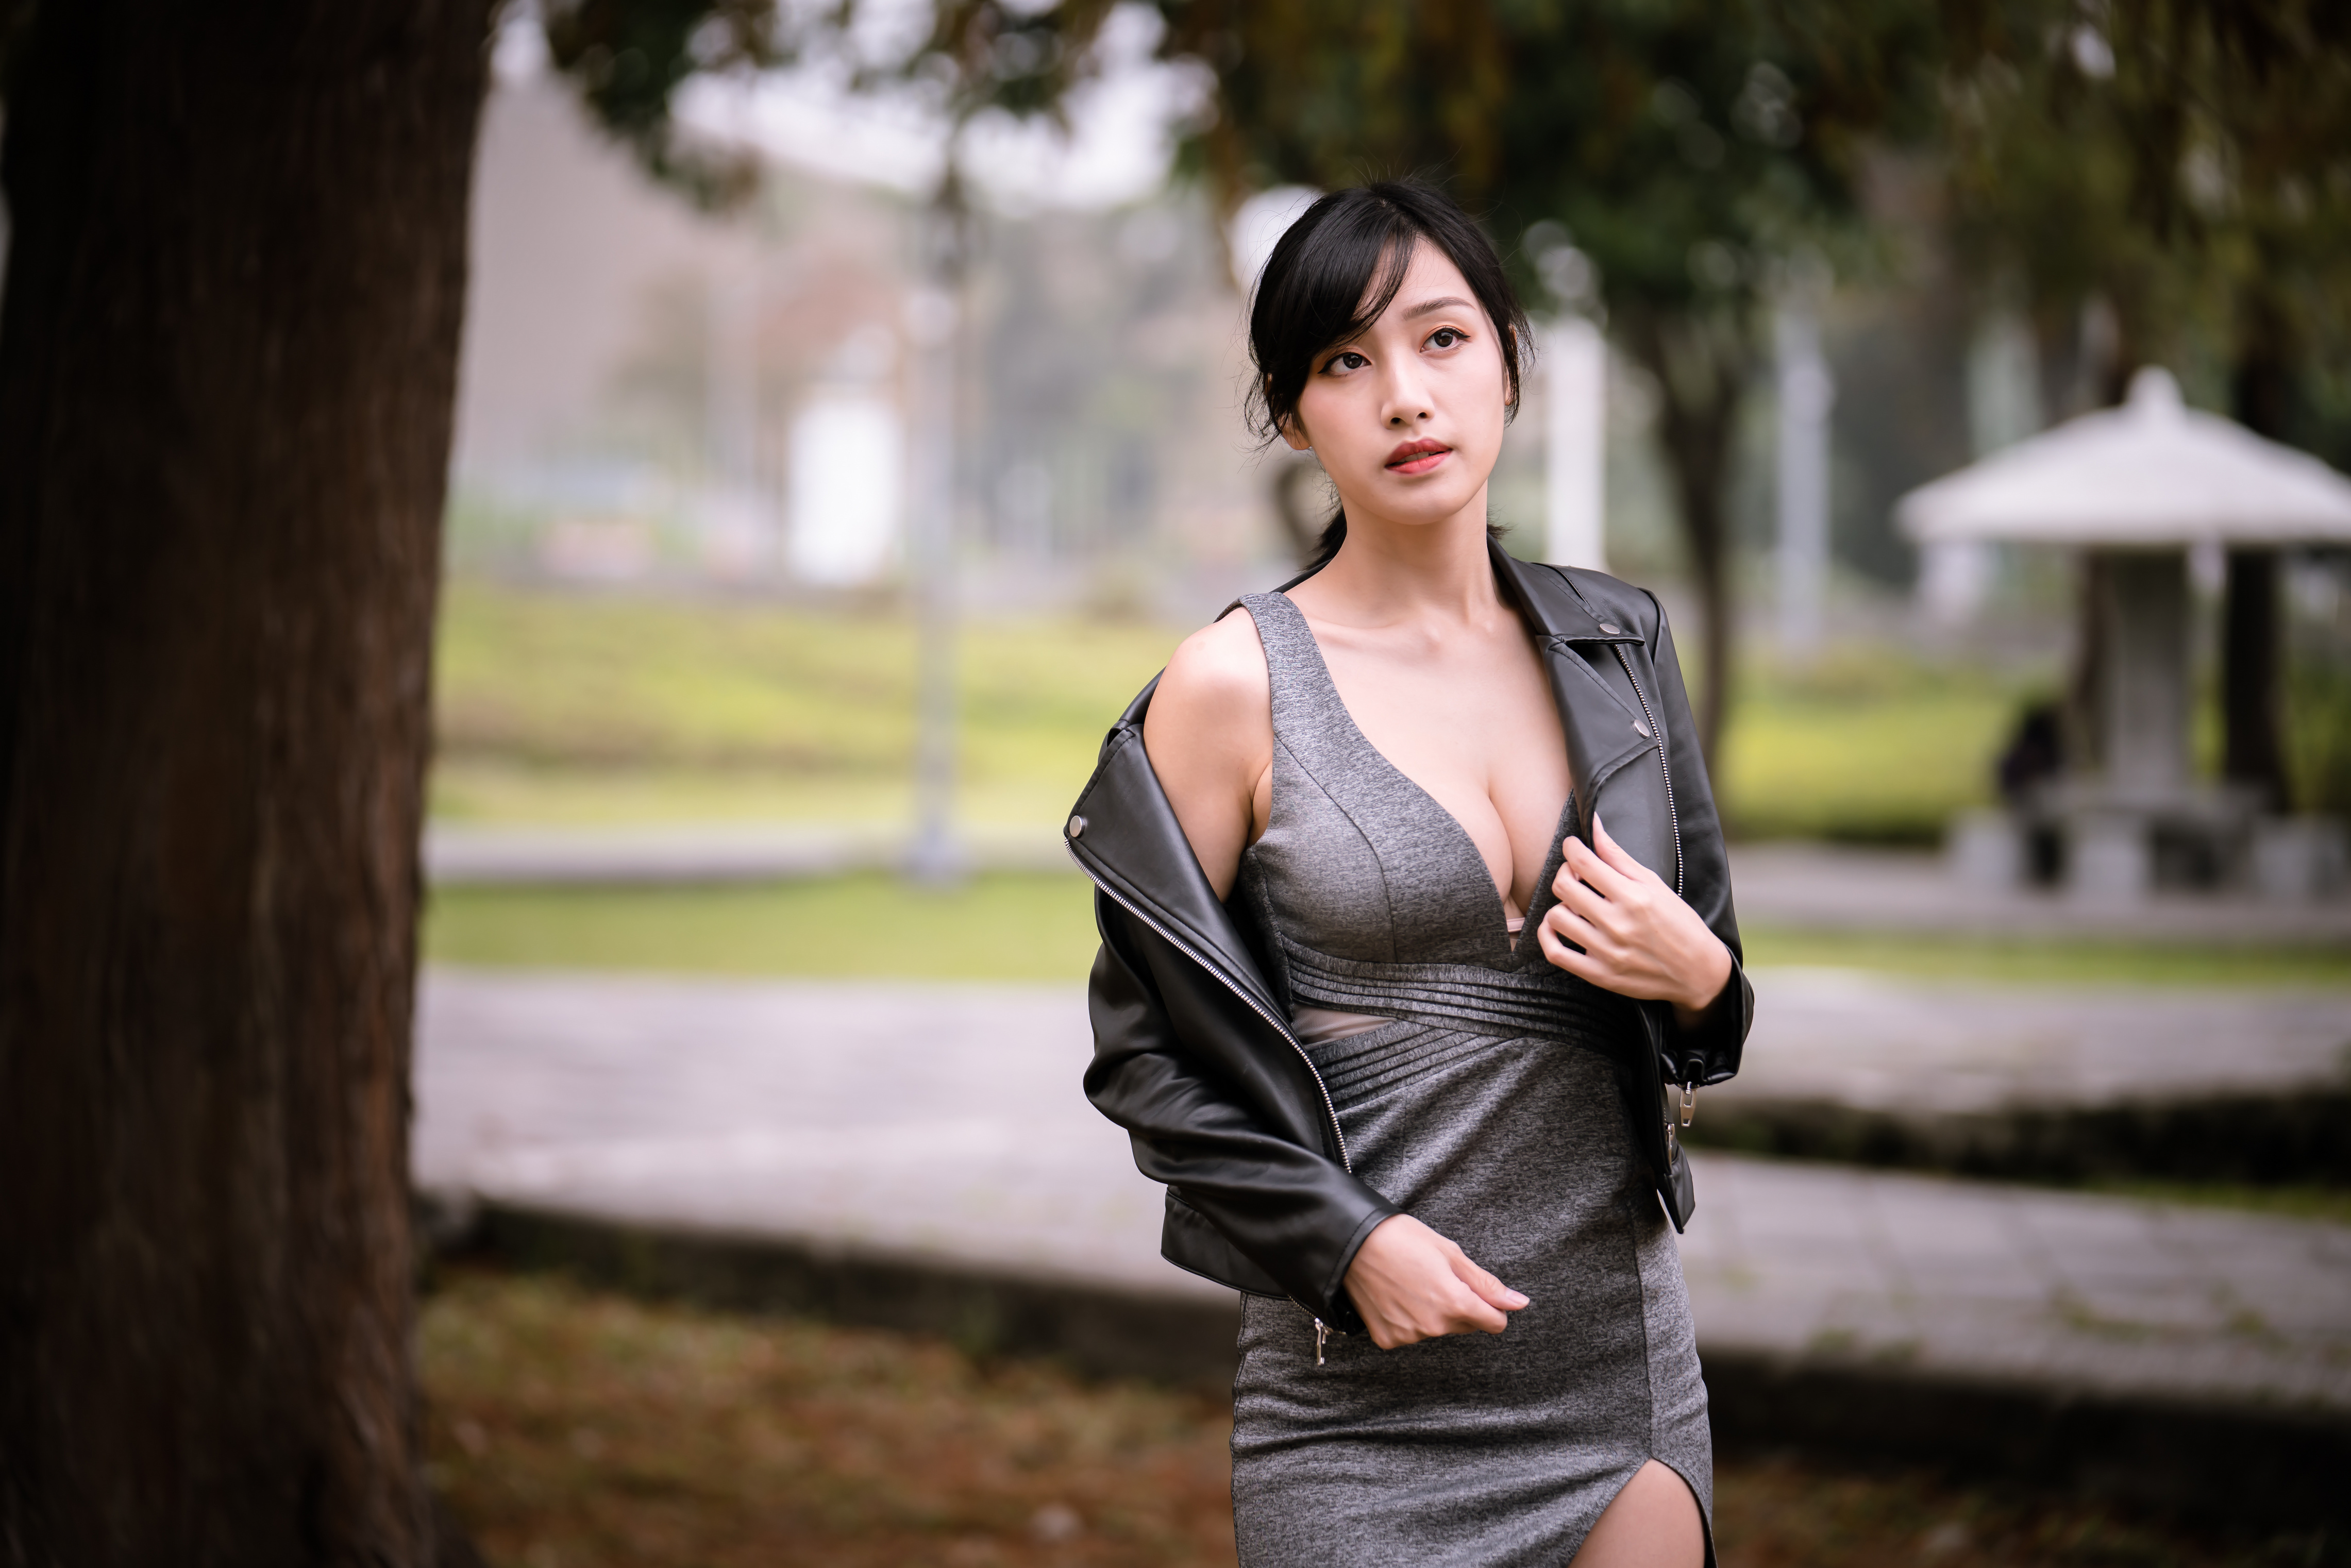 Asian Model Women Depth Of Field Long Hair Dark Hair Leather Jackets Ponytail Trees Grass 4562x3043